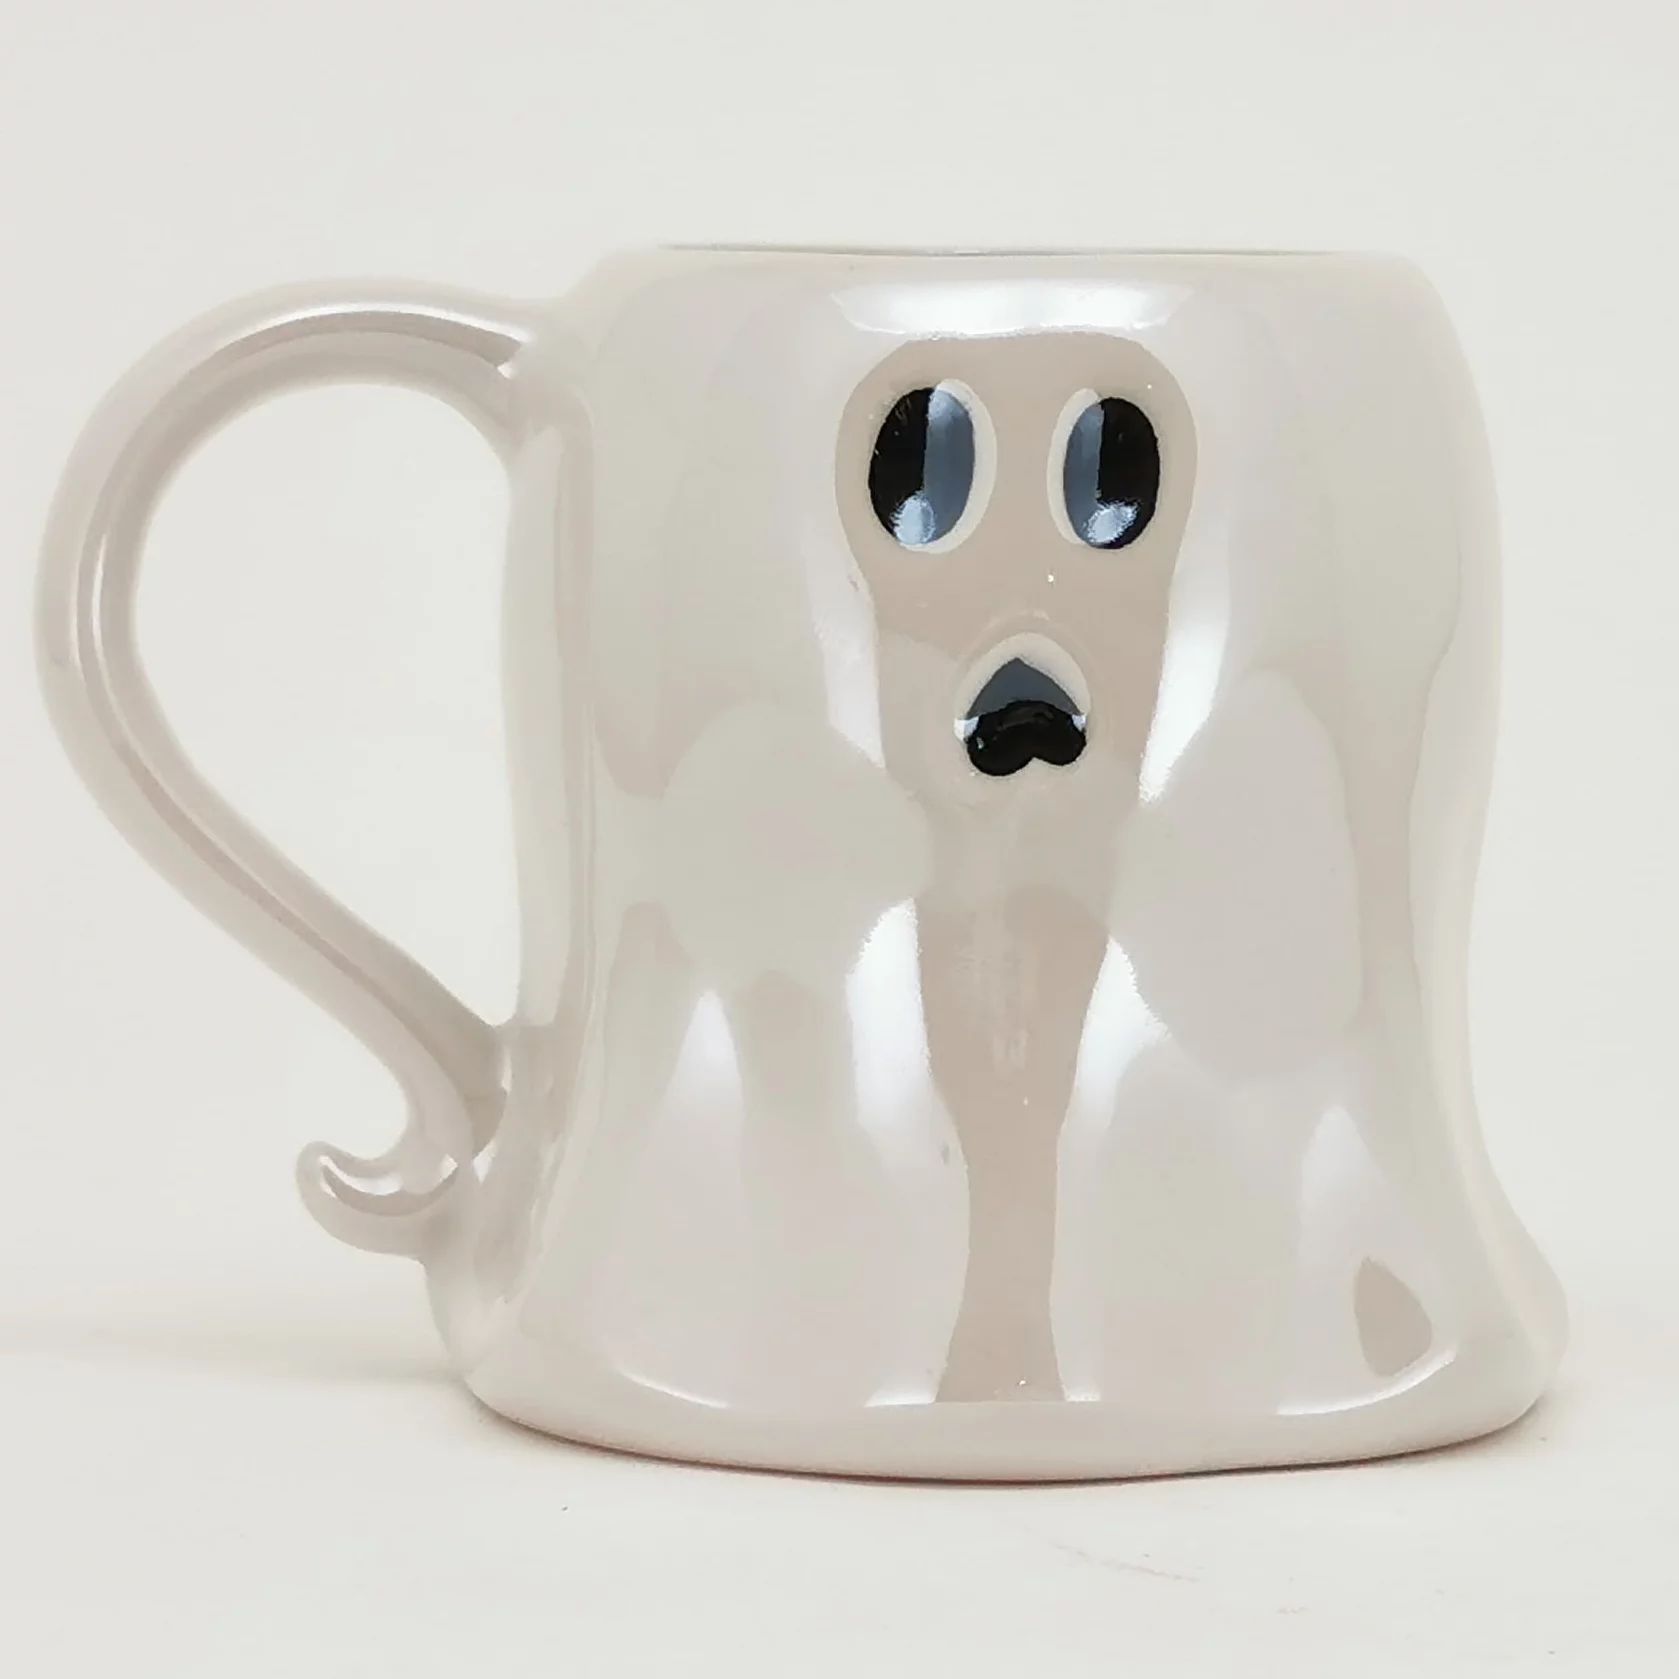 Way to Celebrate! White Ghost Mug, 15 fl oz capacity, White Stoneware | Walmart (US)